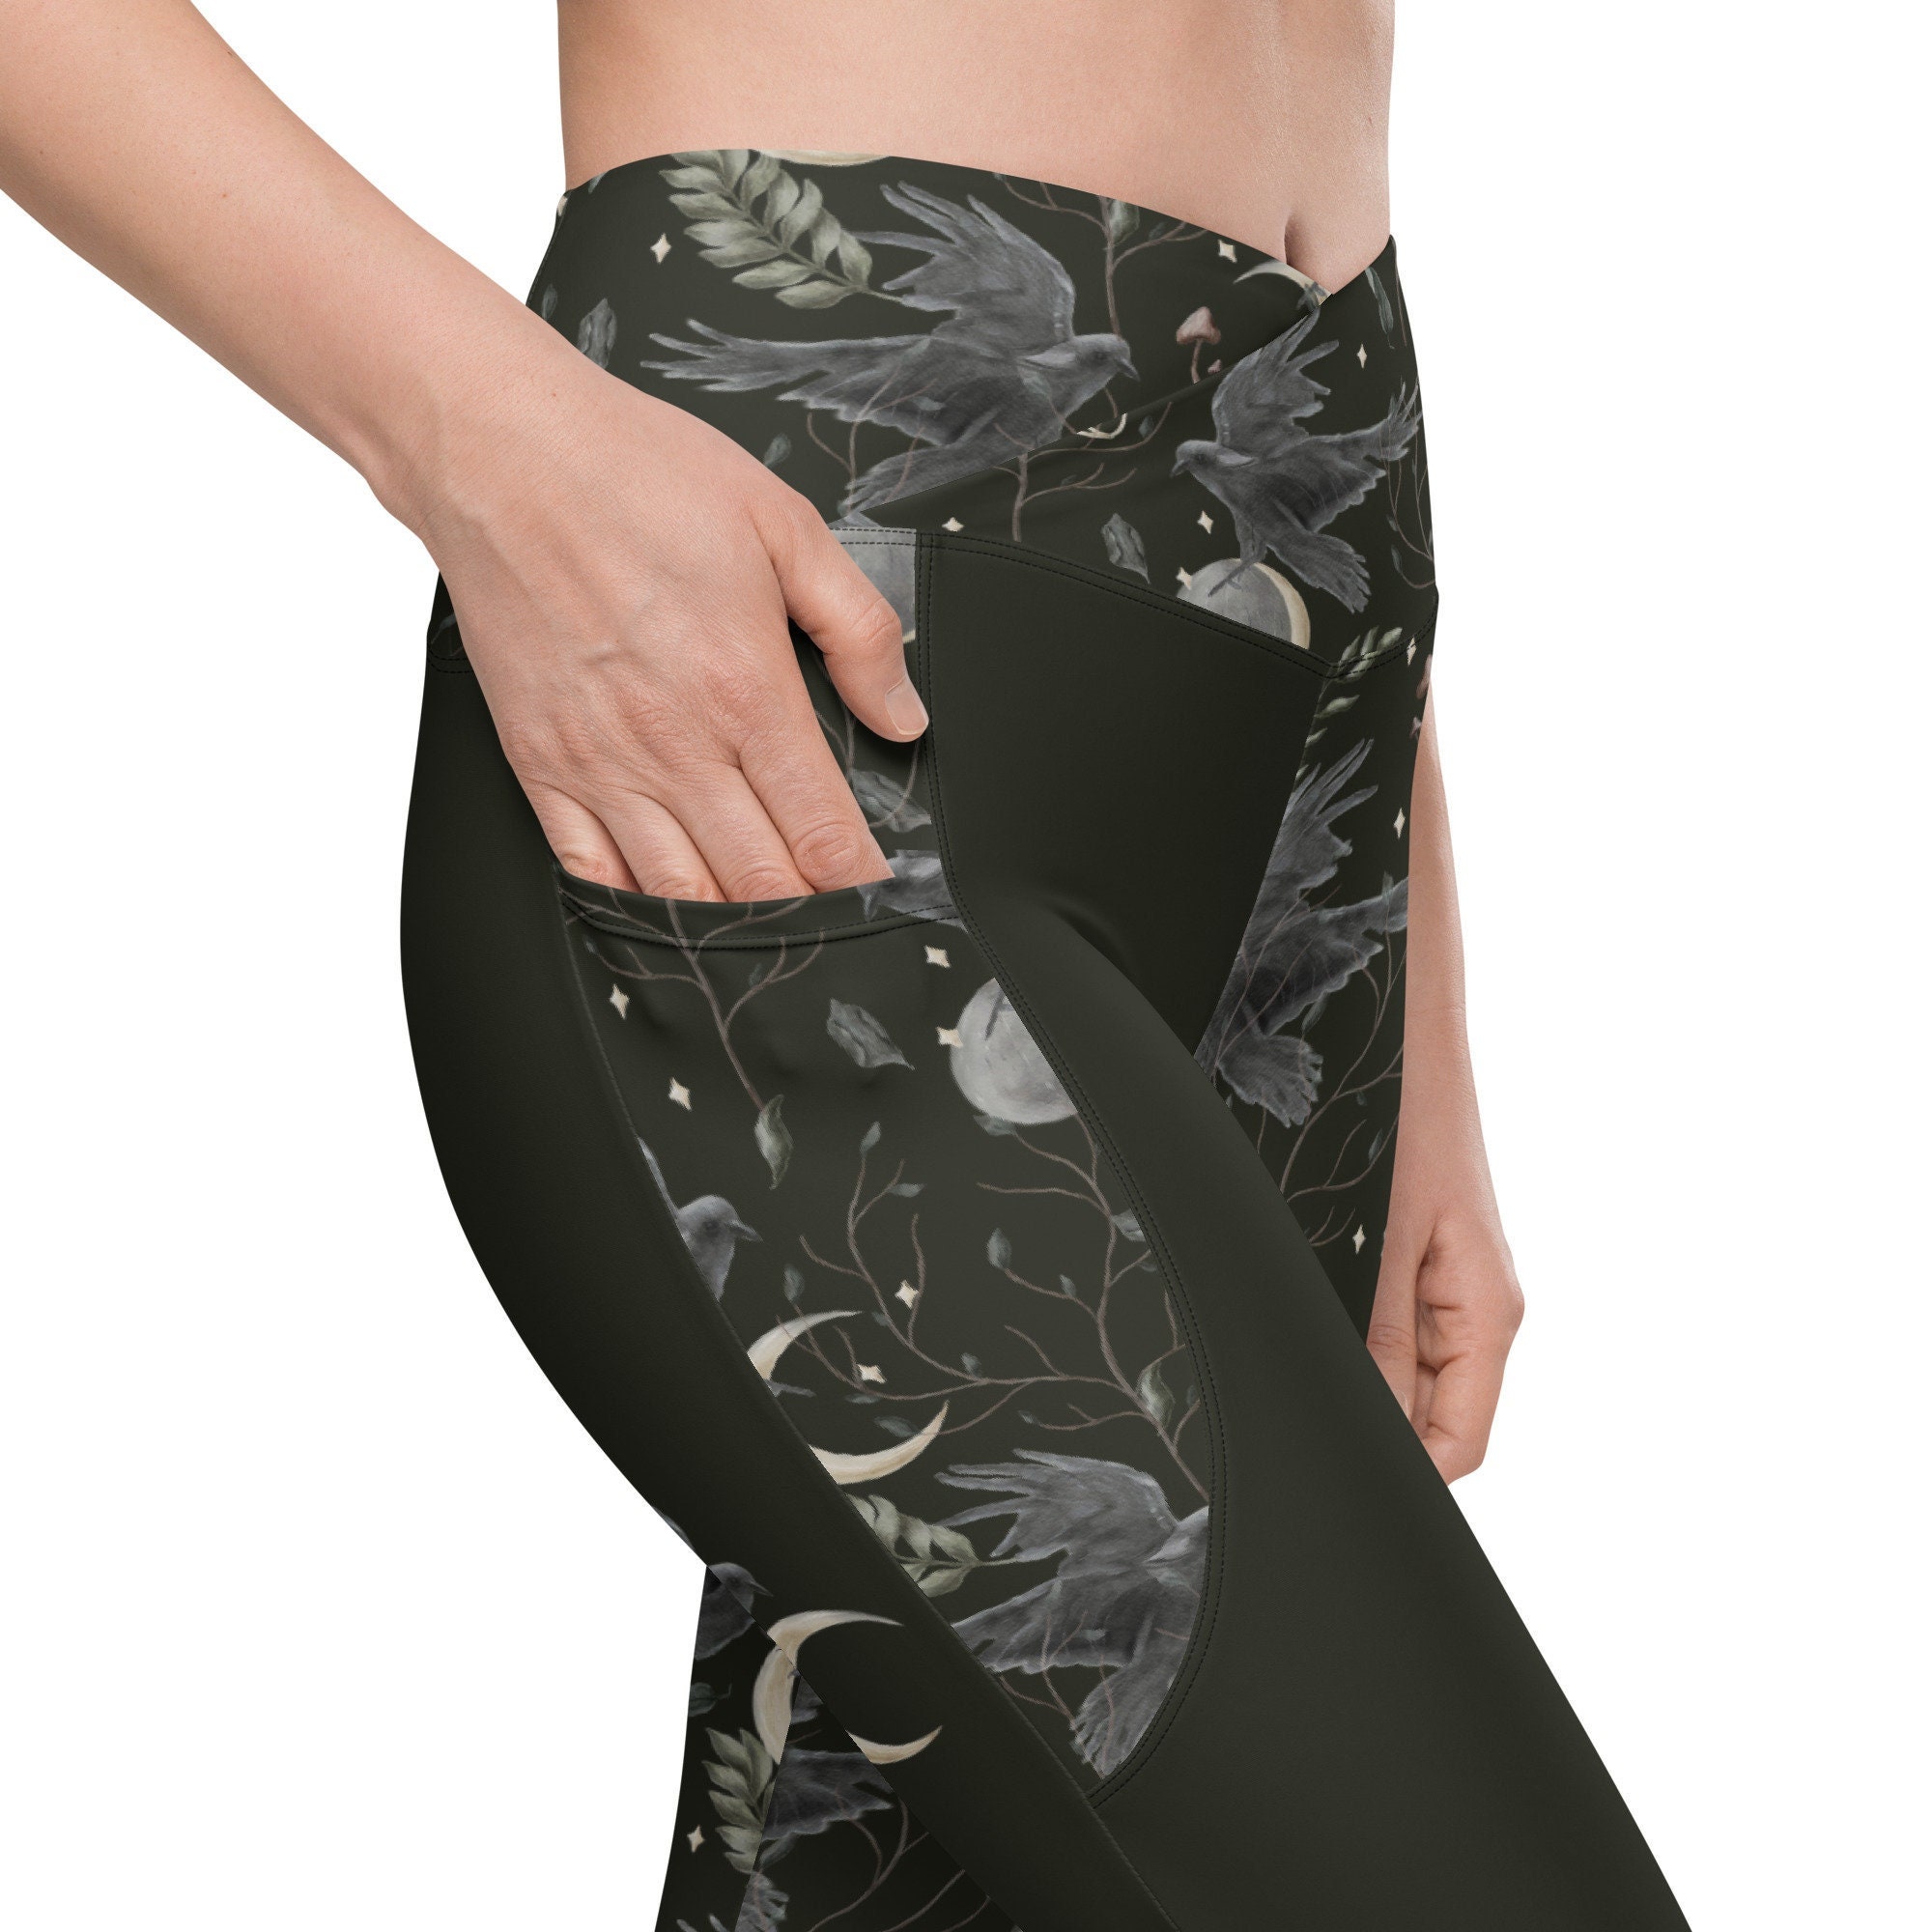 womens Giam XS Tall navy print leggings Polyester Spandex